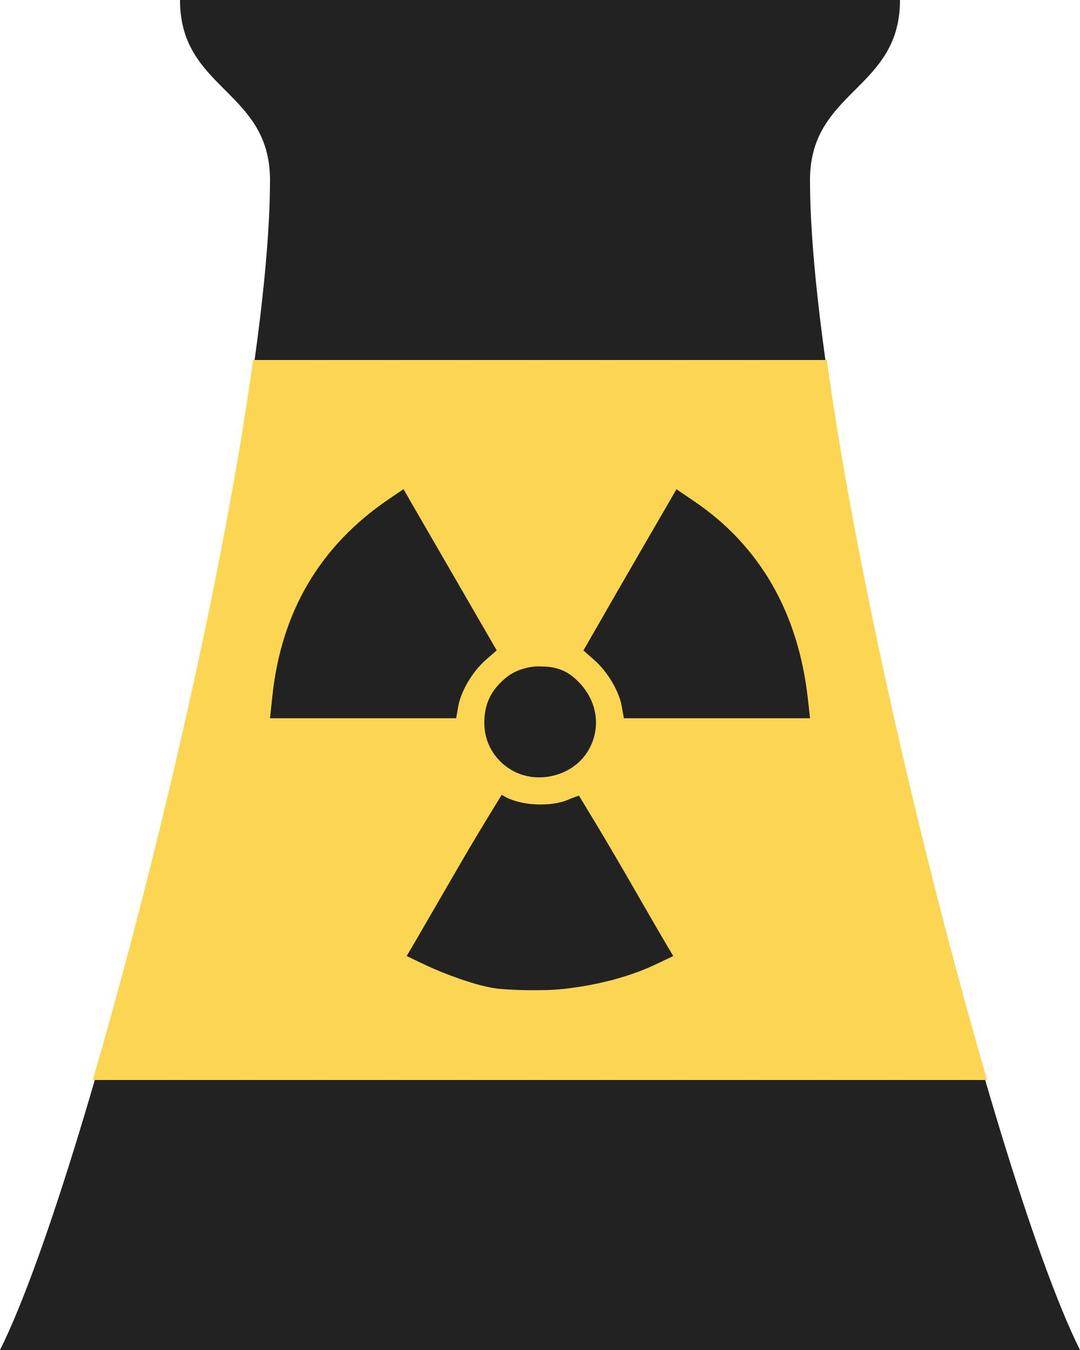 Nuclear Power Plant Reactor Symbol 2 png transparent